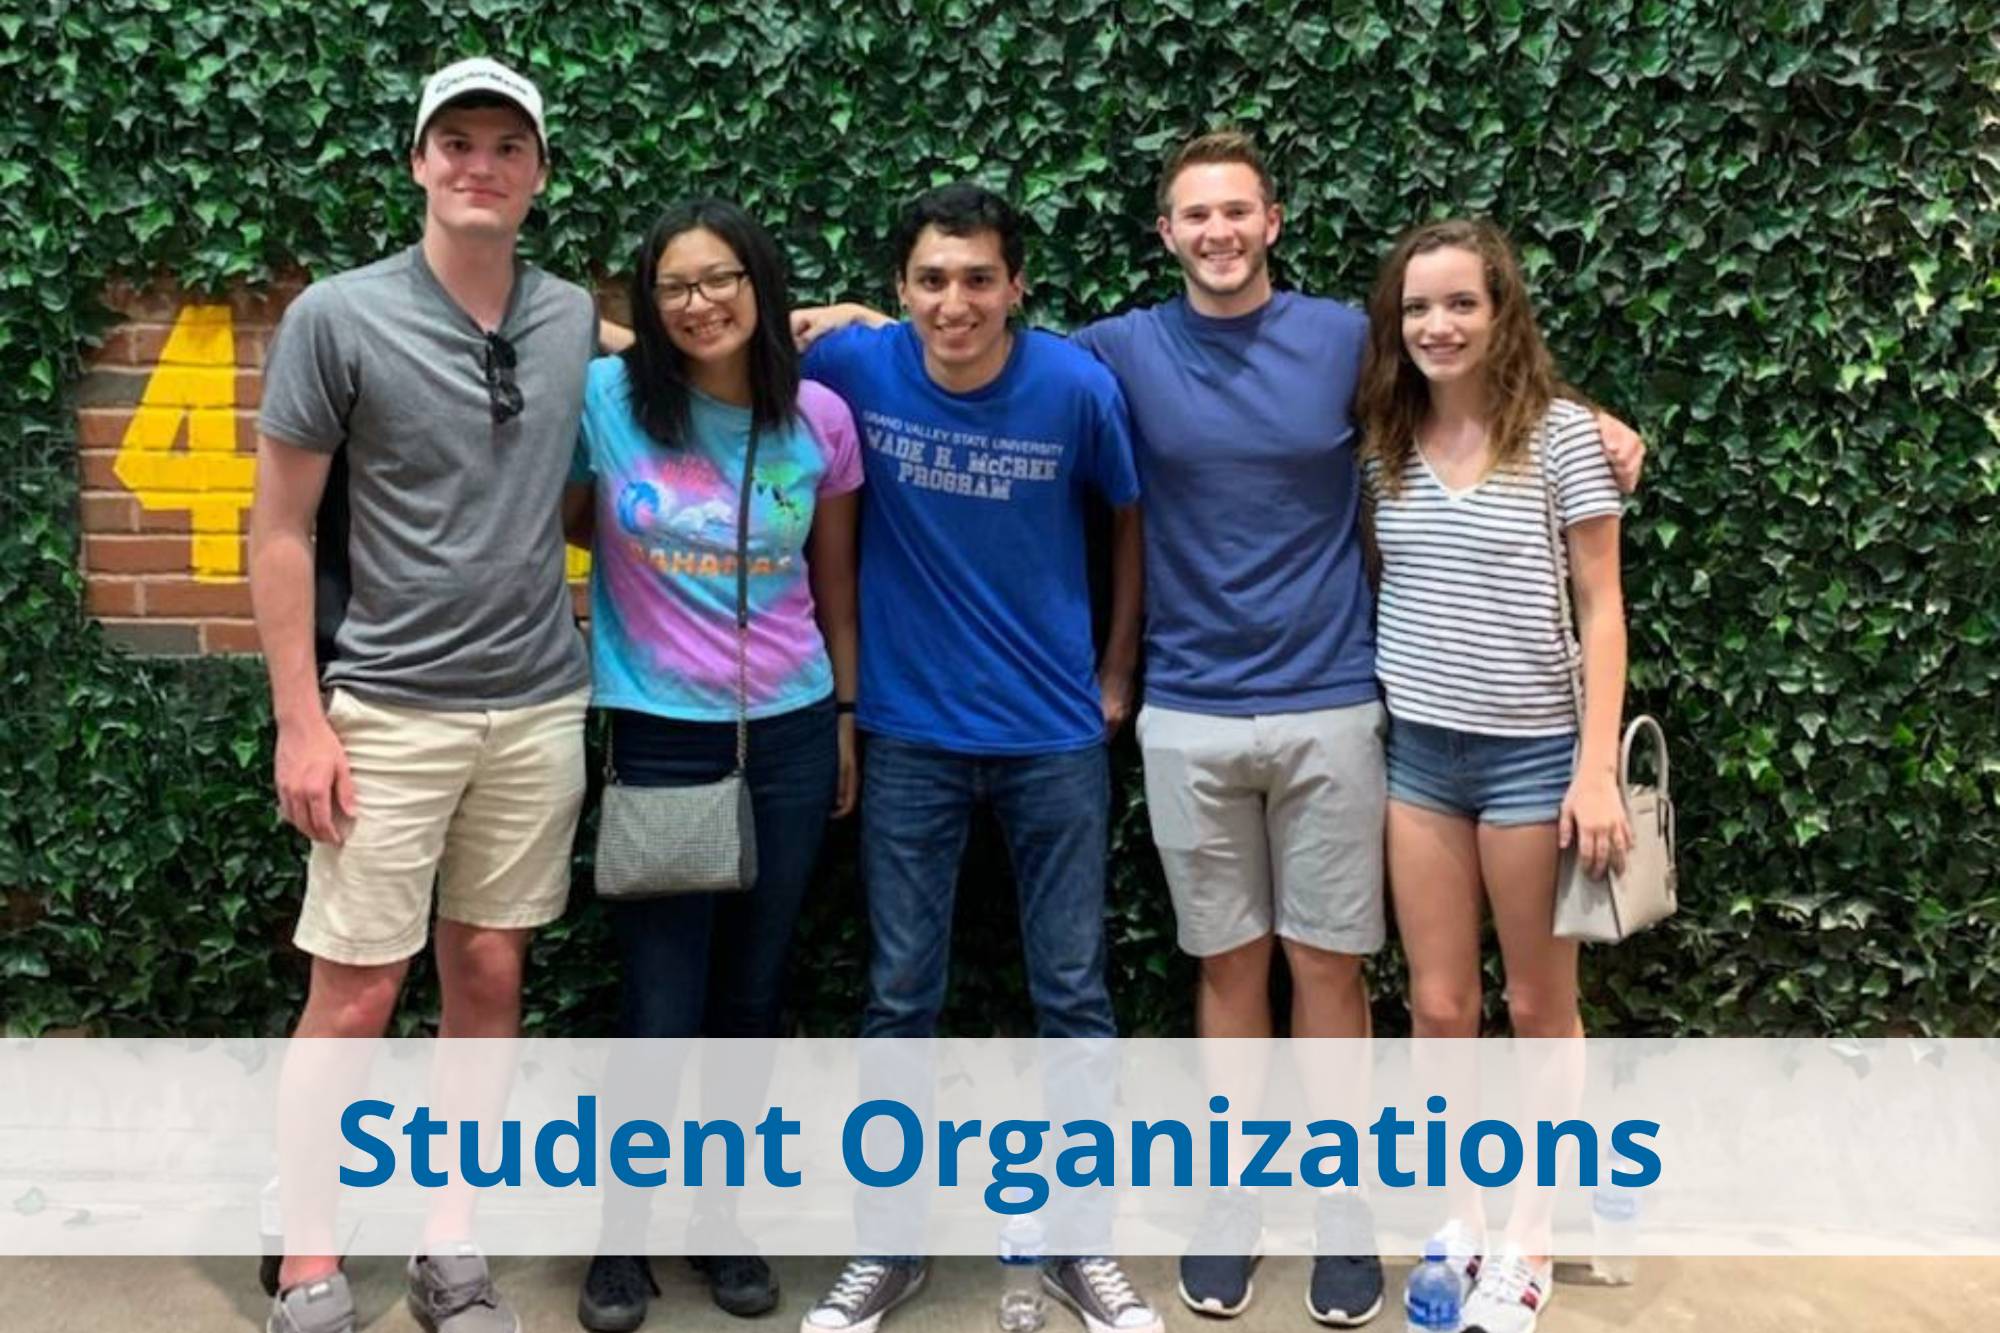 Student organizations